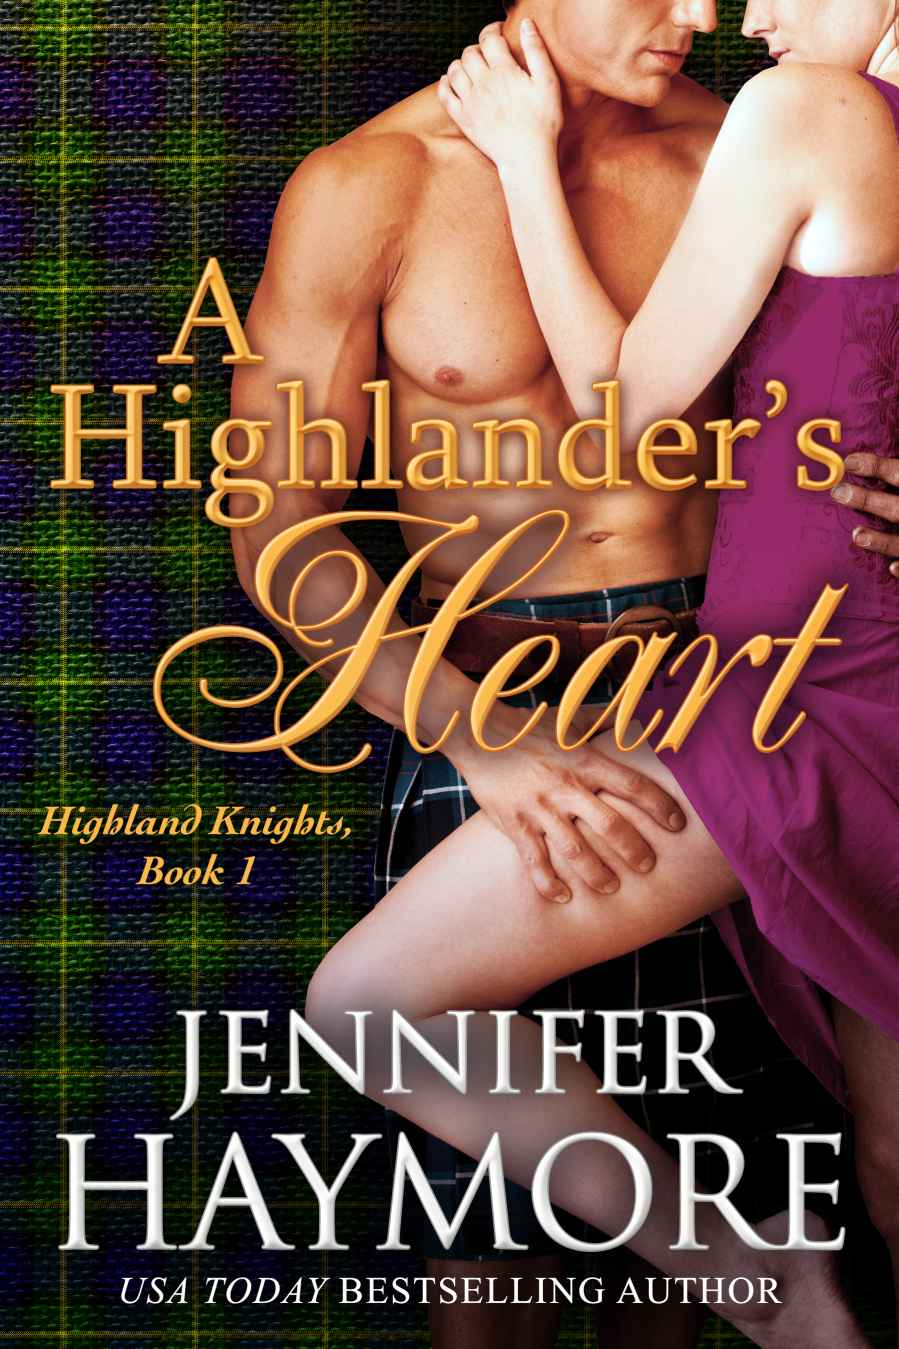 A Highlander's Heart: A Sexy Regency Romance (Highland Knights Book 1) by Jennifer Haymore